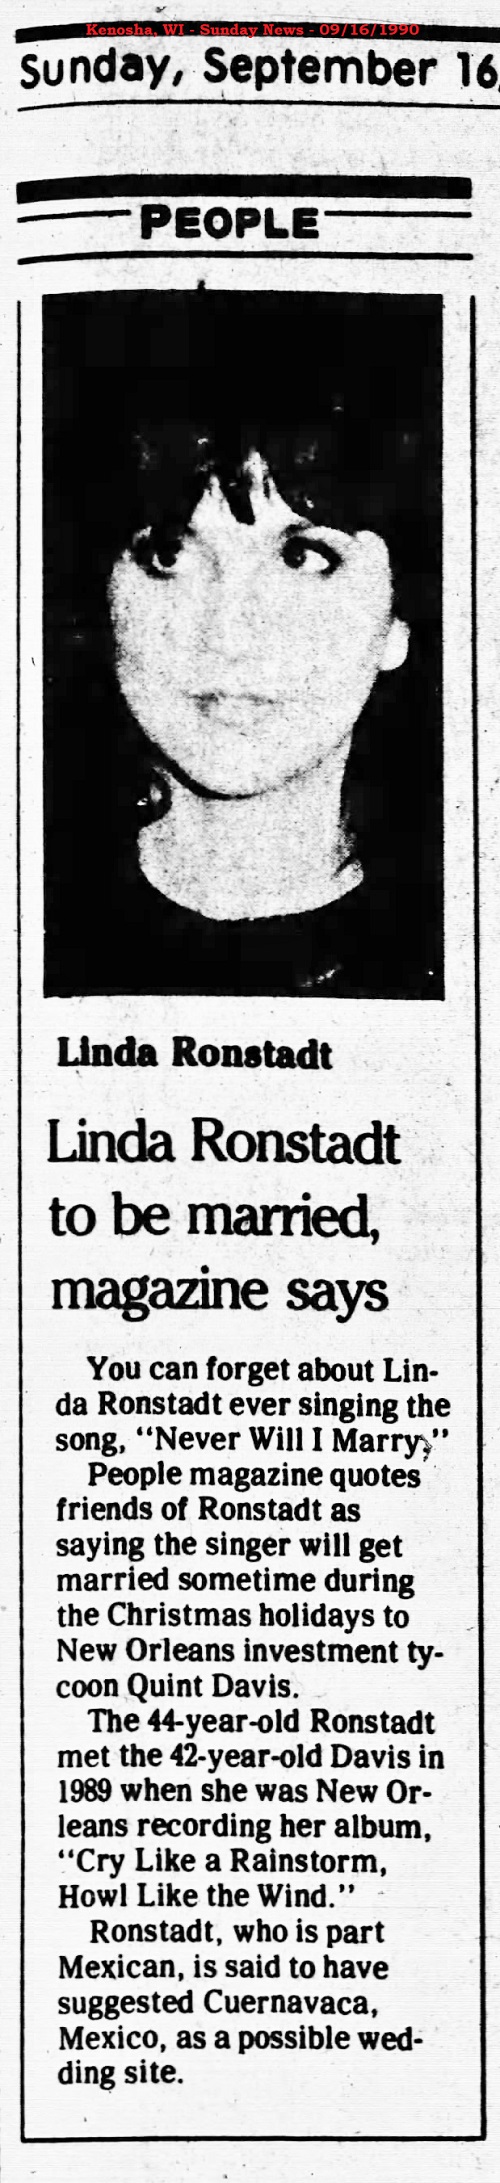 Linda Ronstadt Quint Davis